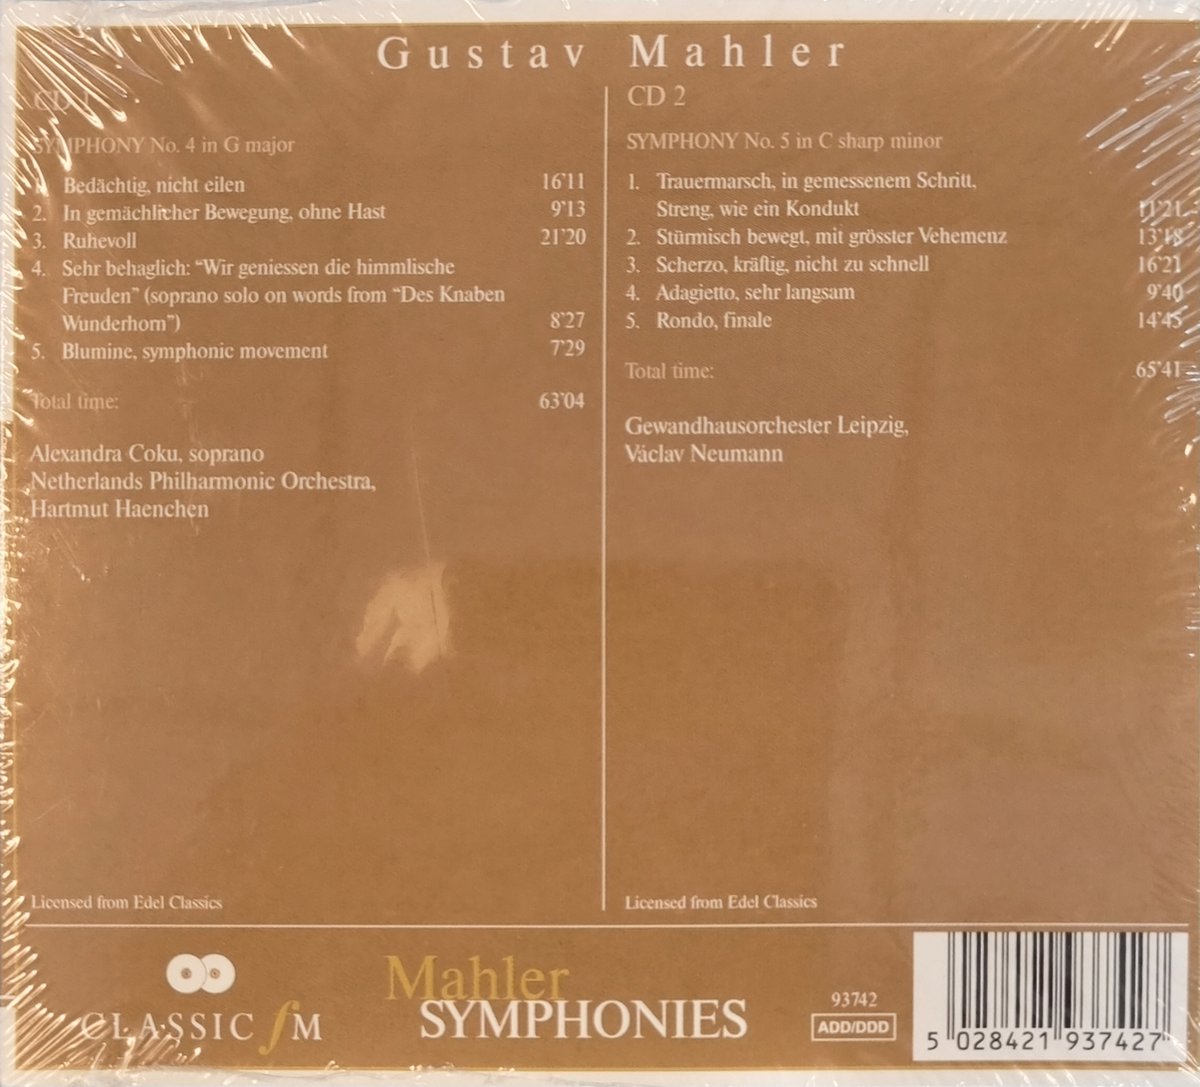 Mahler symphonies